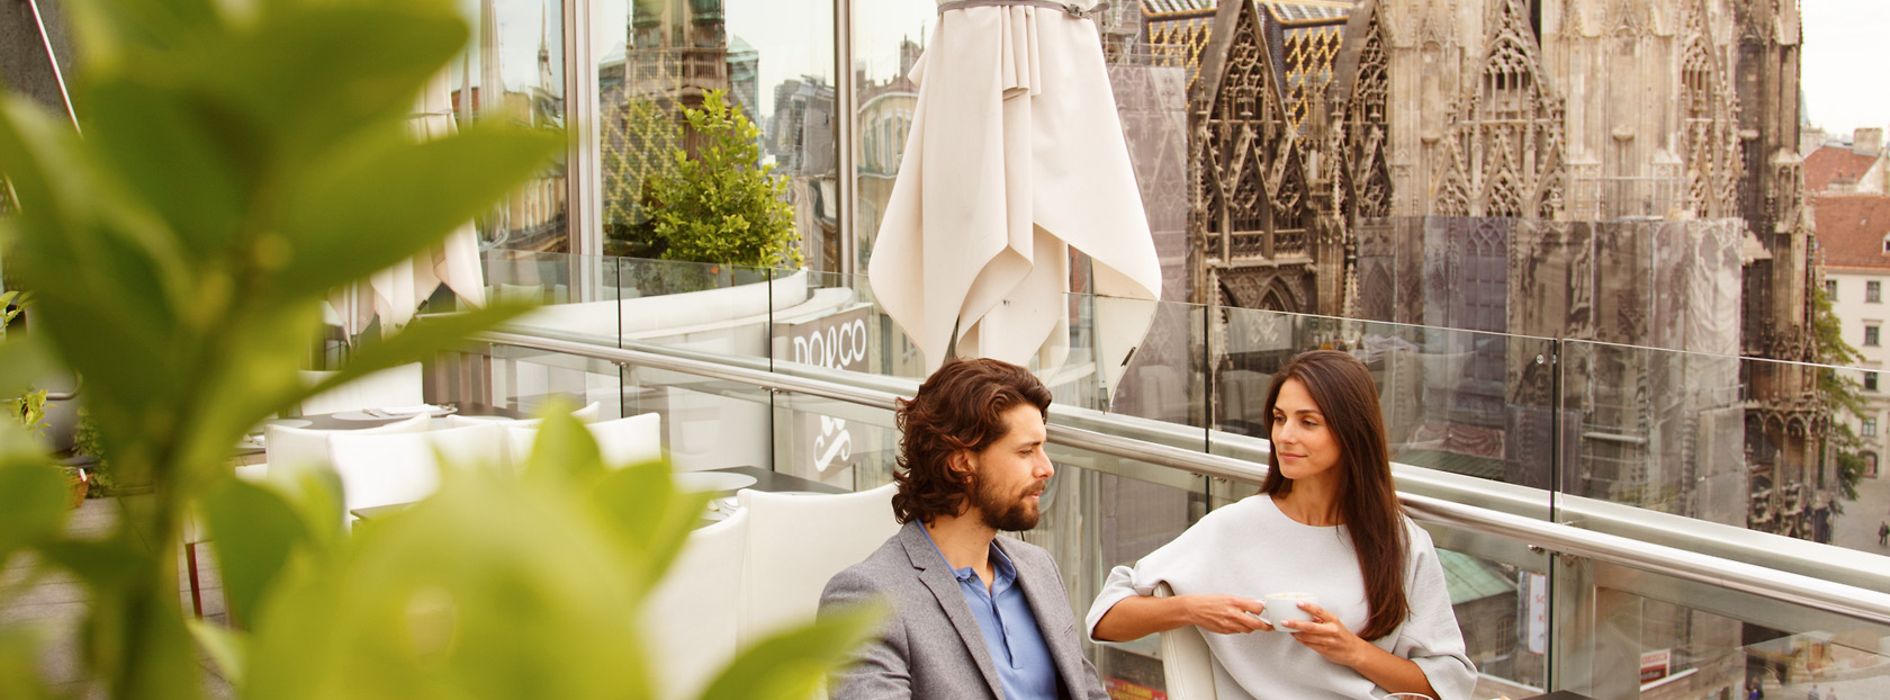 Restaurant Do & Co on Stephansplatz, couple on the terrace